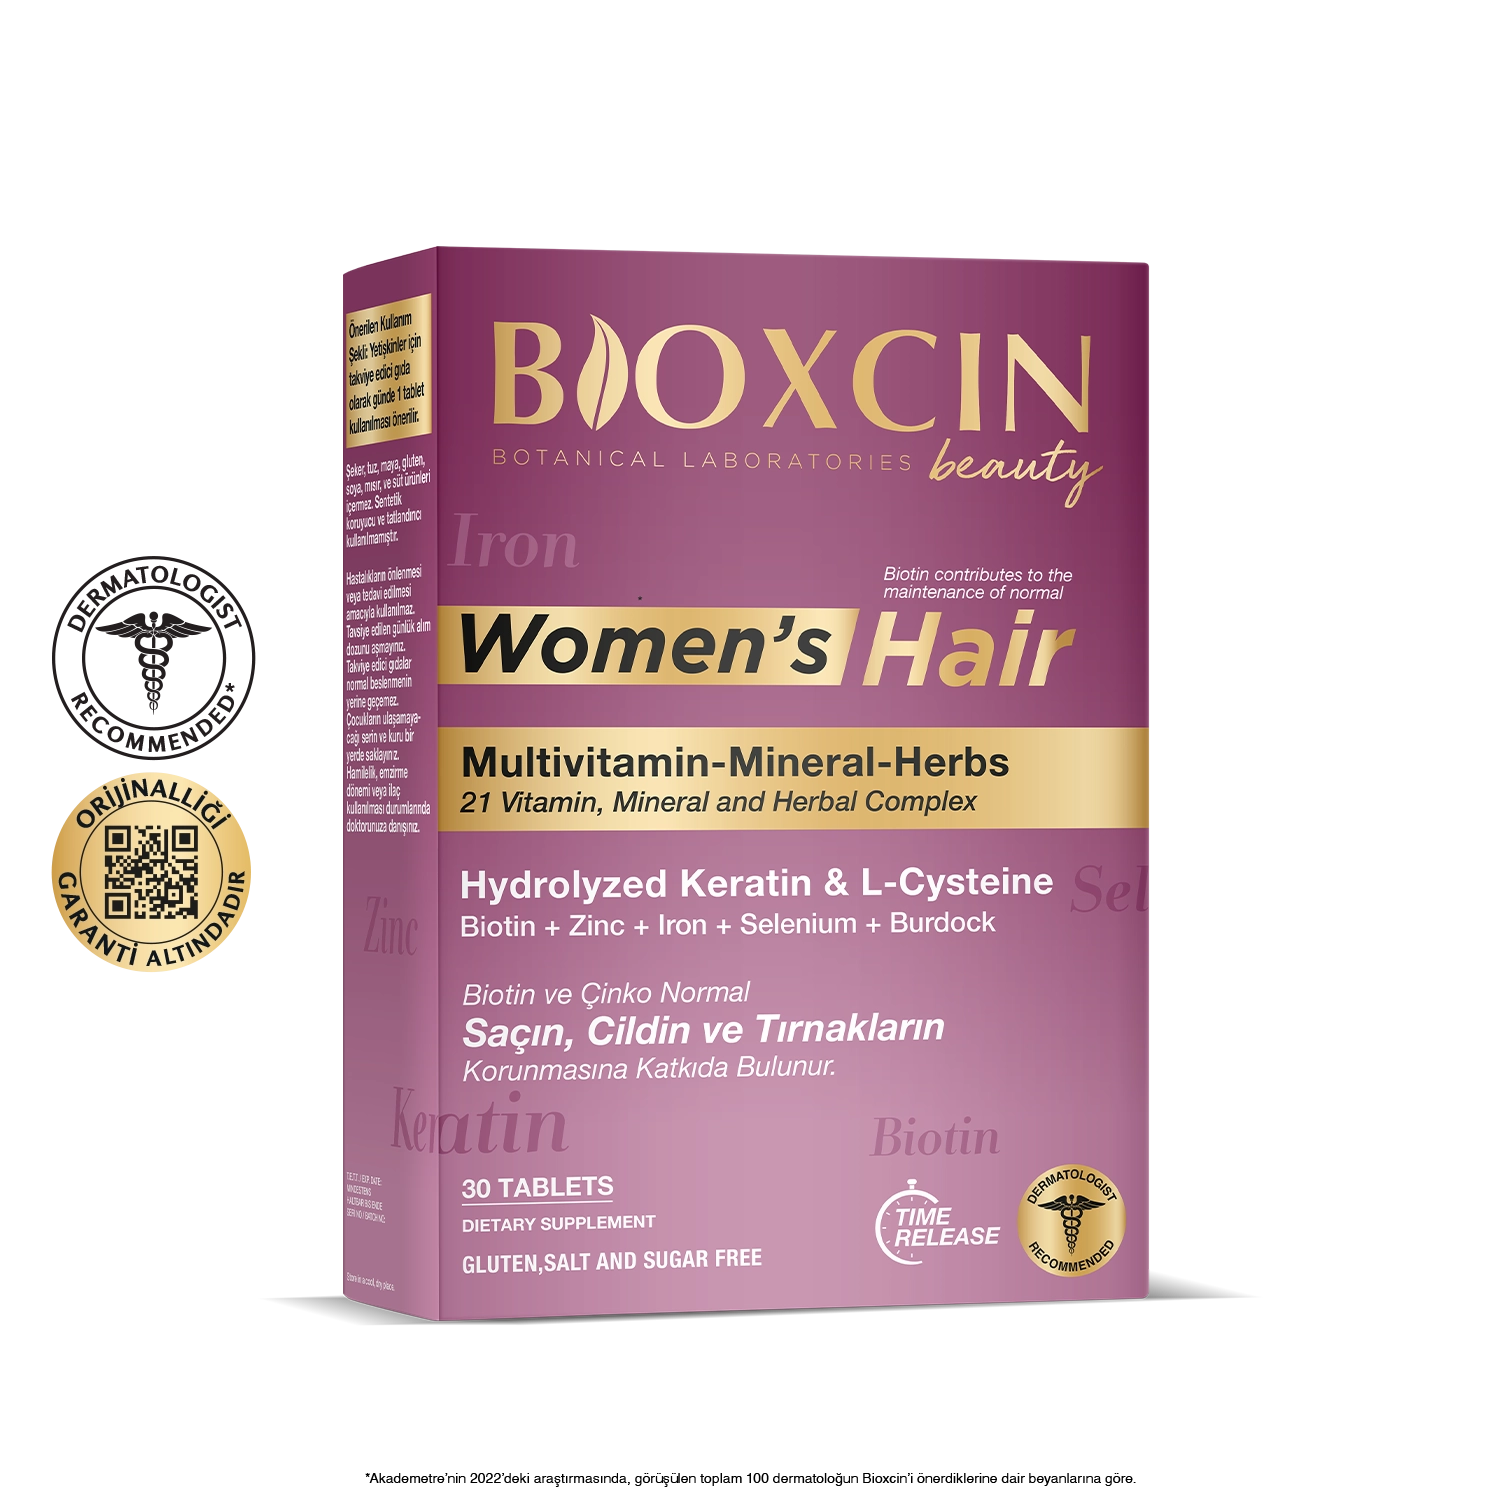 b’oxcin women’s hair